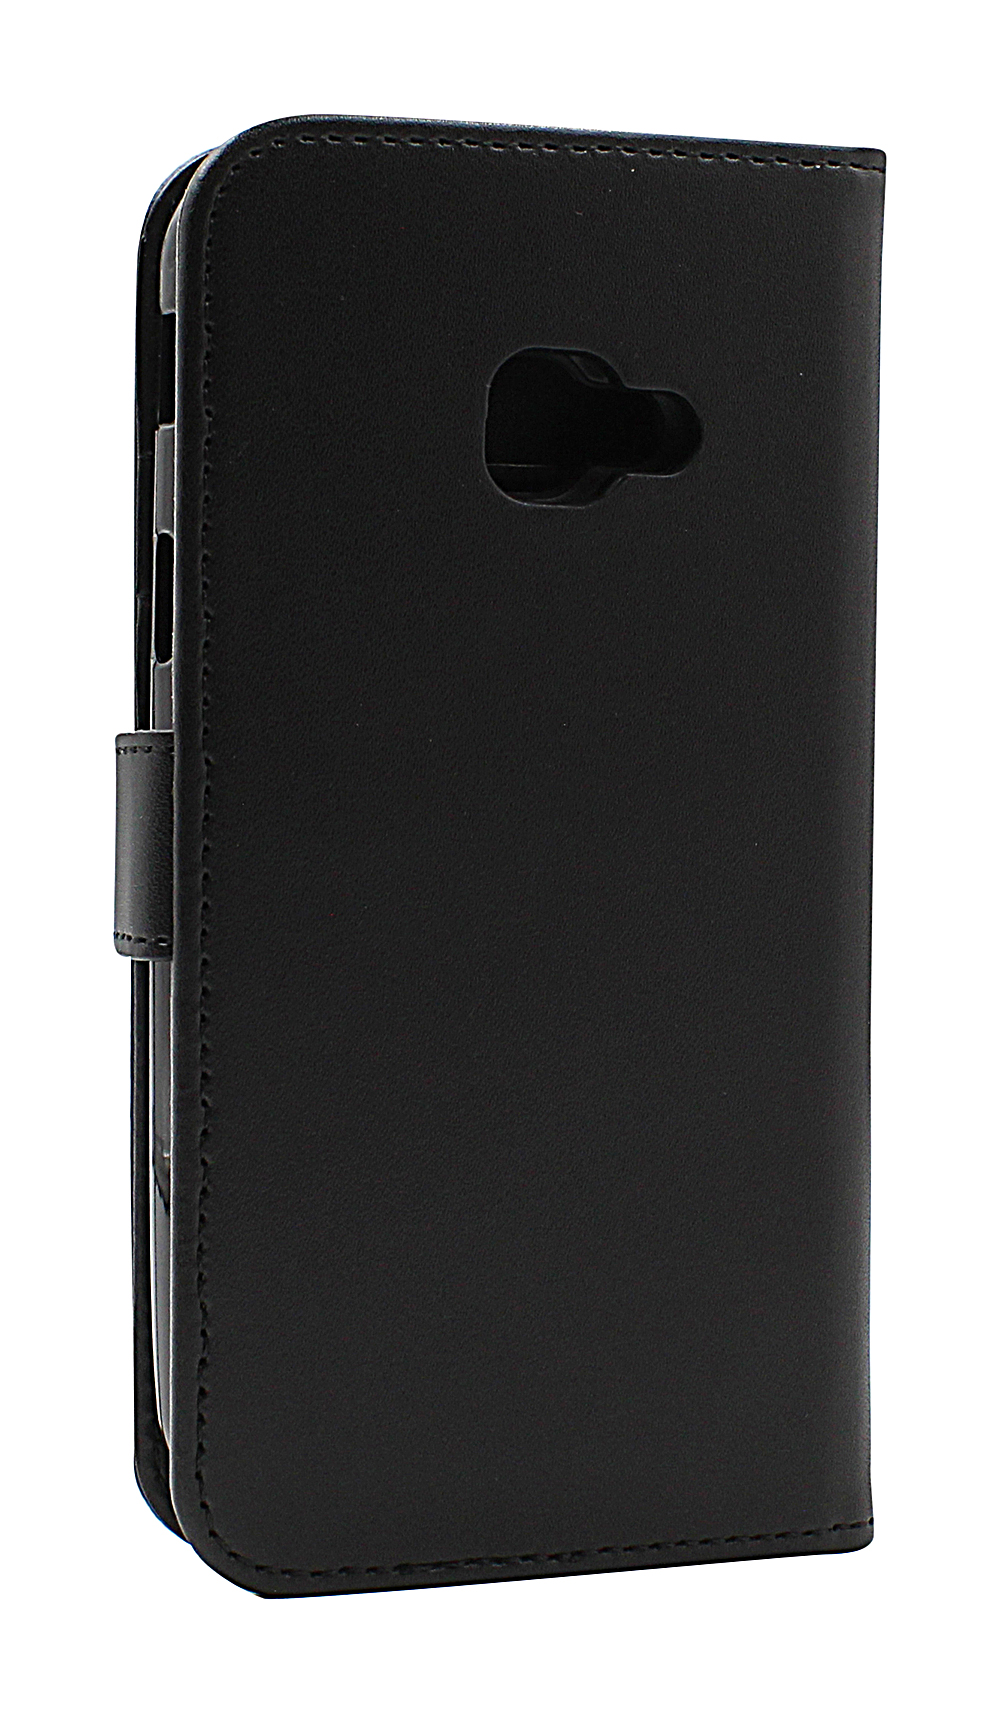 Skimblocker Magnet Wallet Samsung Galaxy Xcover 4 (G390F)